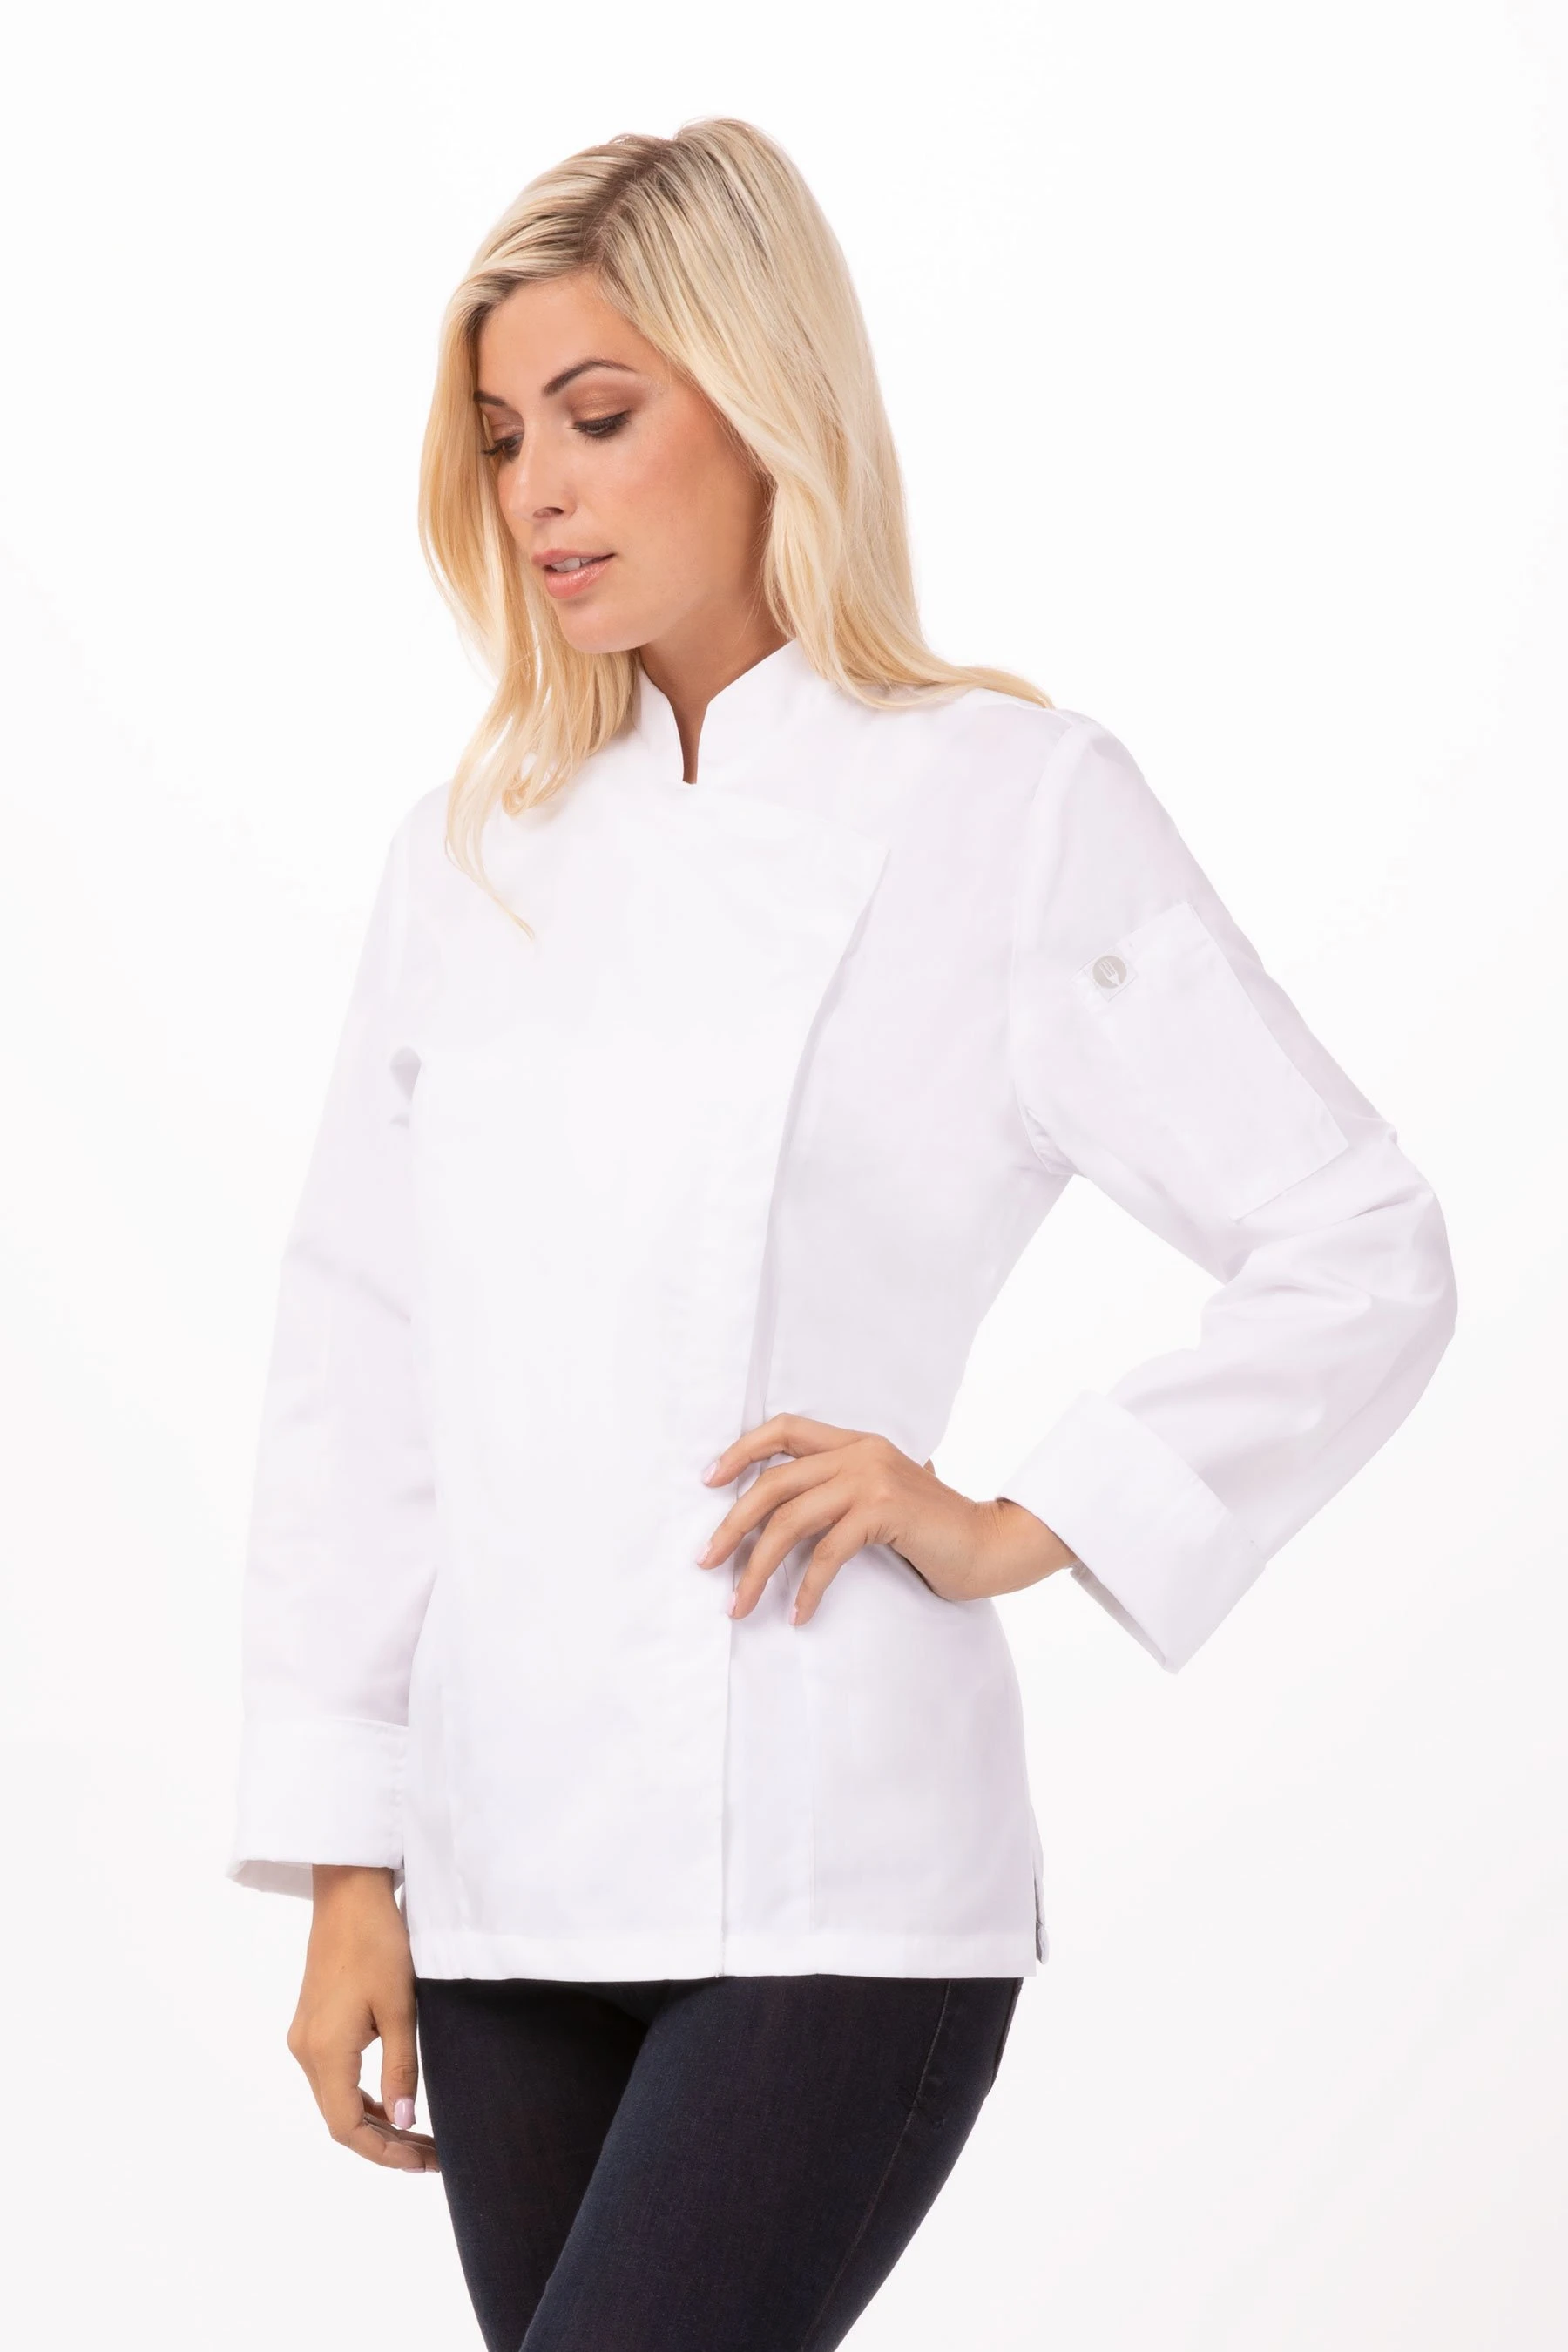 Lansing Female Chef Coat